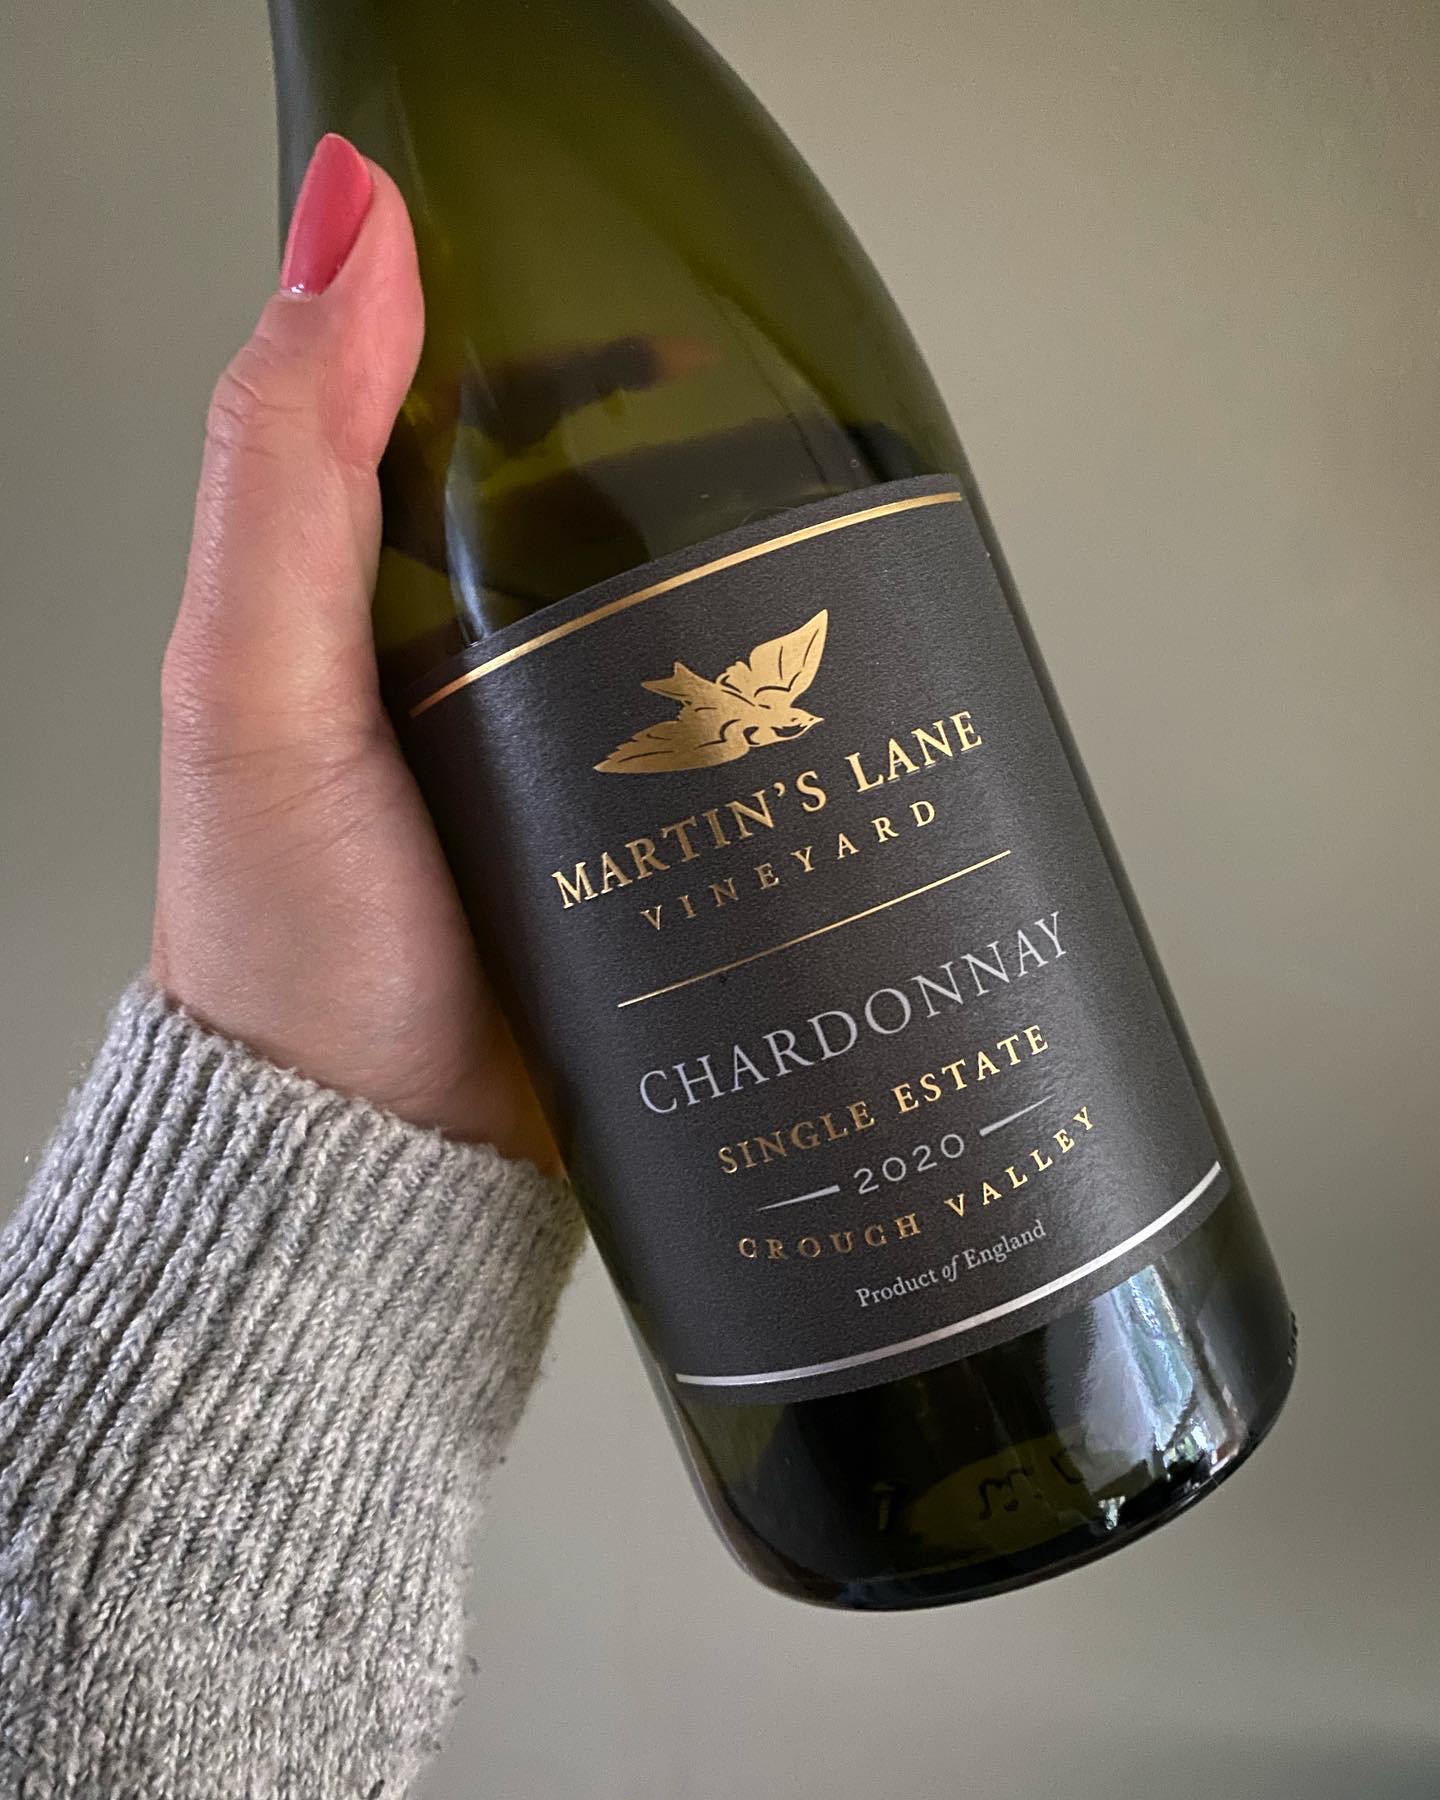 Martin's Lane Chardonnay